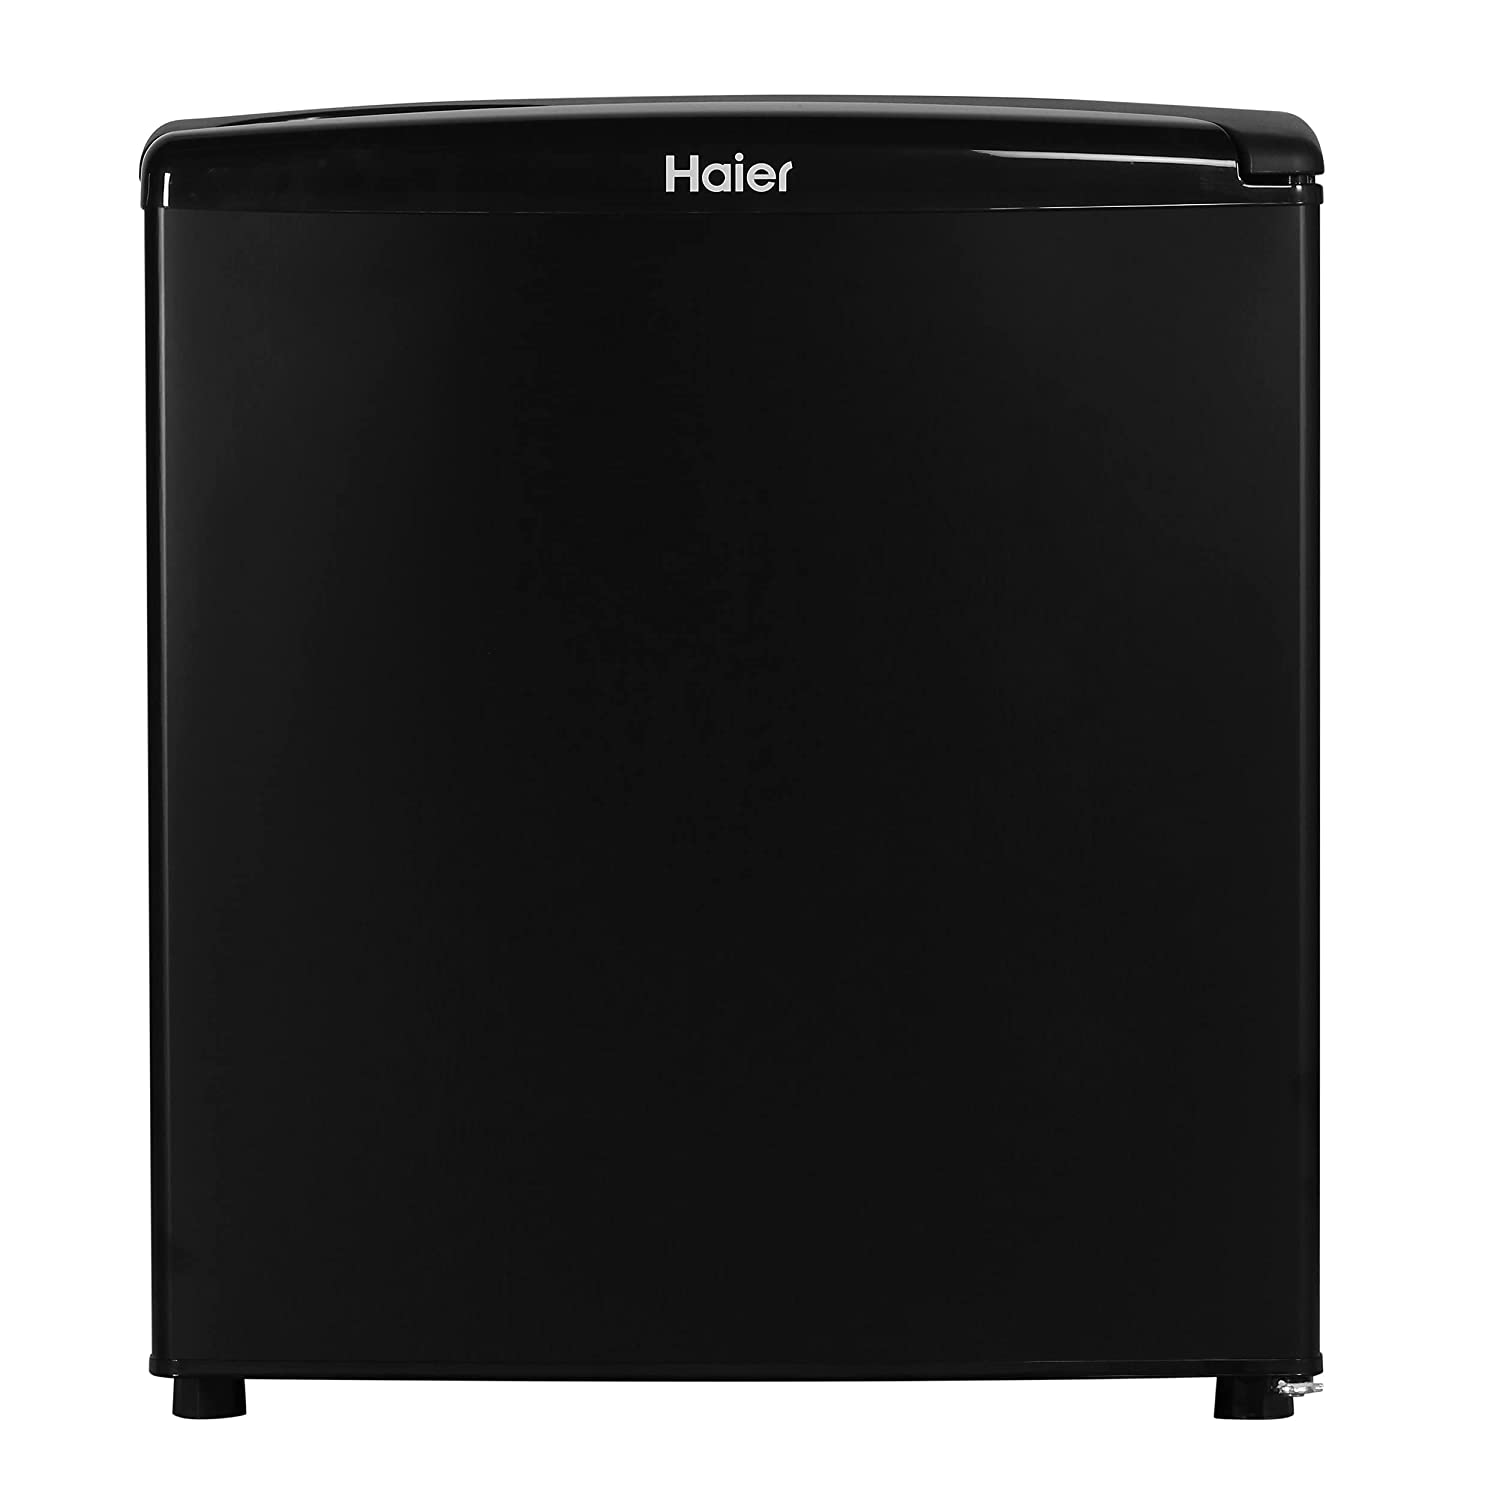 Haier 53 ltr refrigerator review